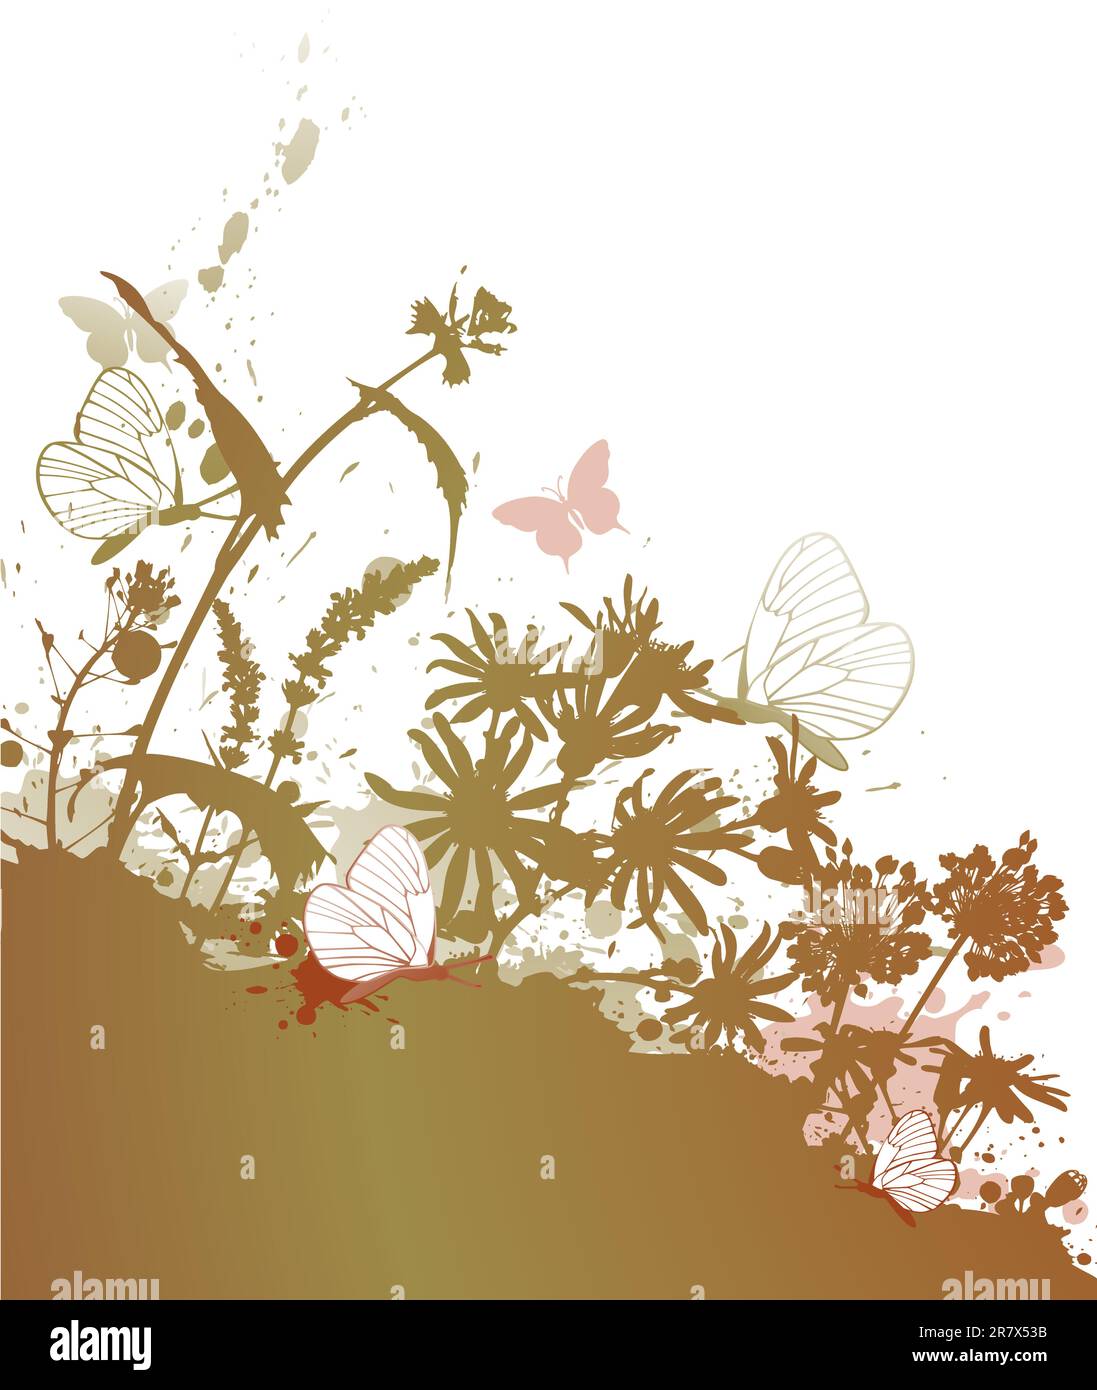 Vector grunge floral background with butterflies Illustration de Vecteur